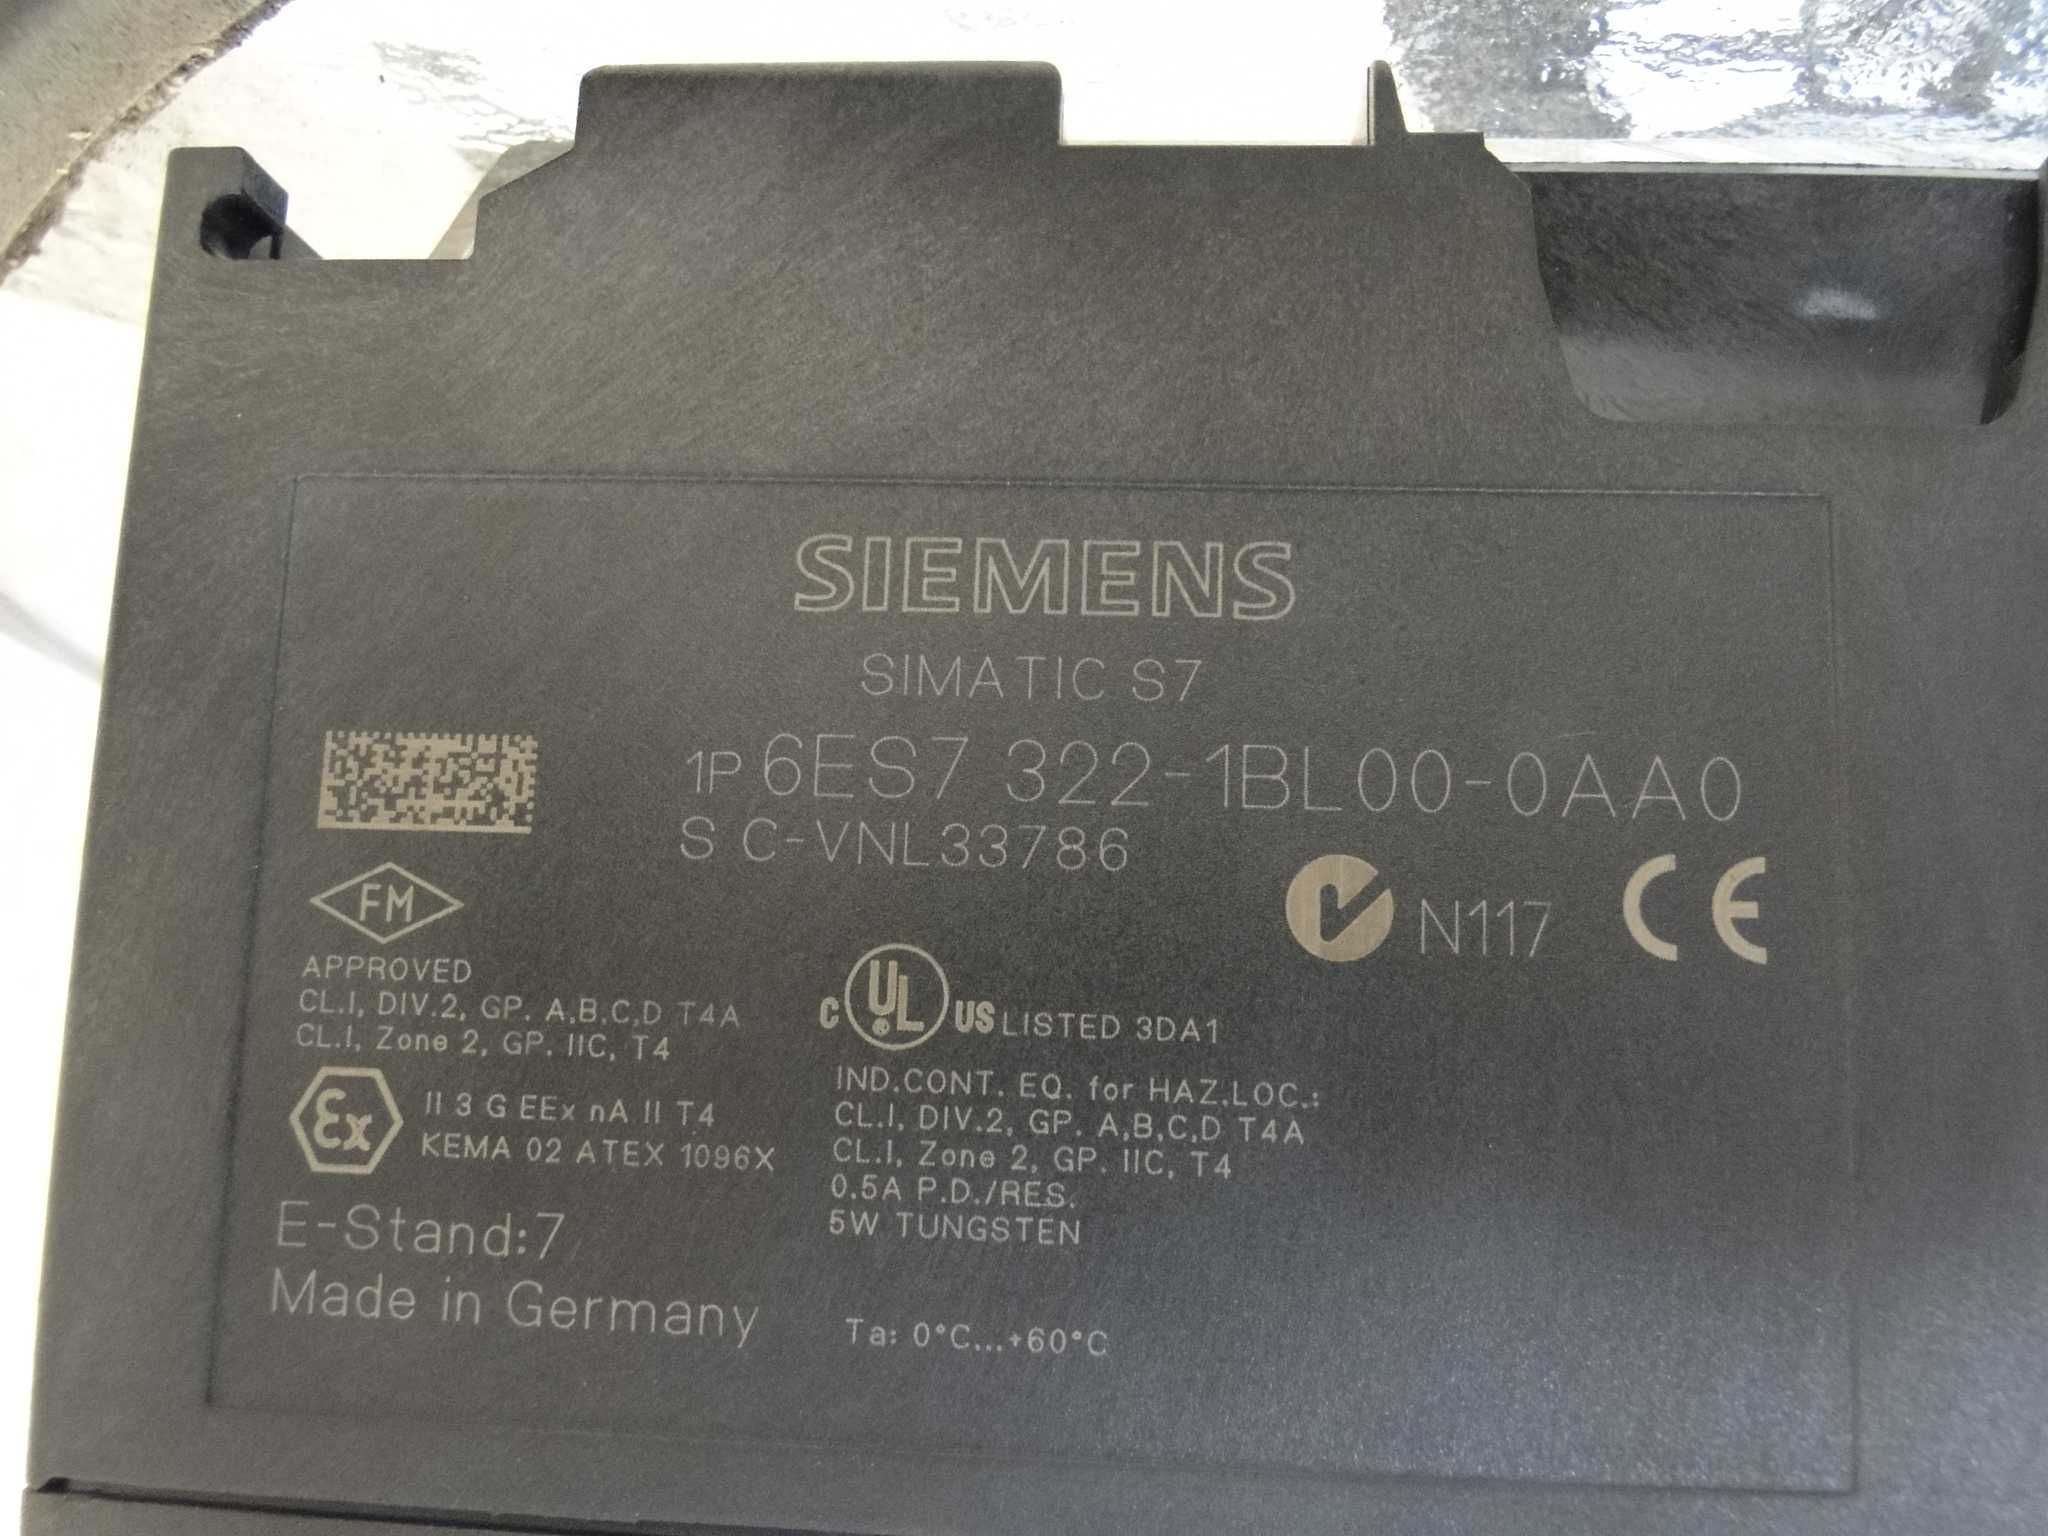 Siemens S7-300, CPU315-2 DP  moduły DI/DO/DO